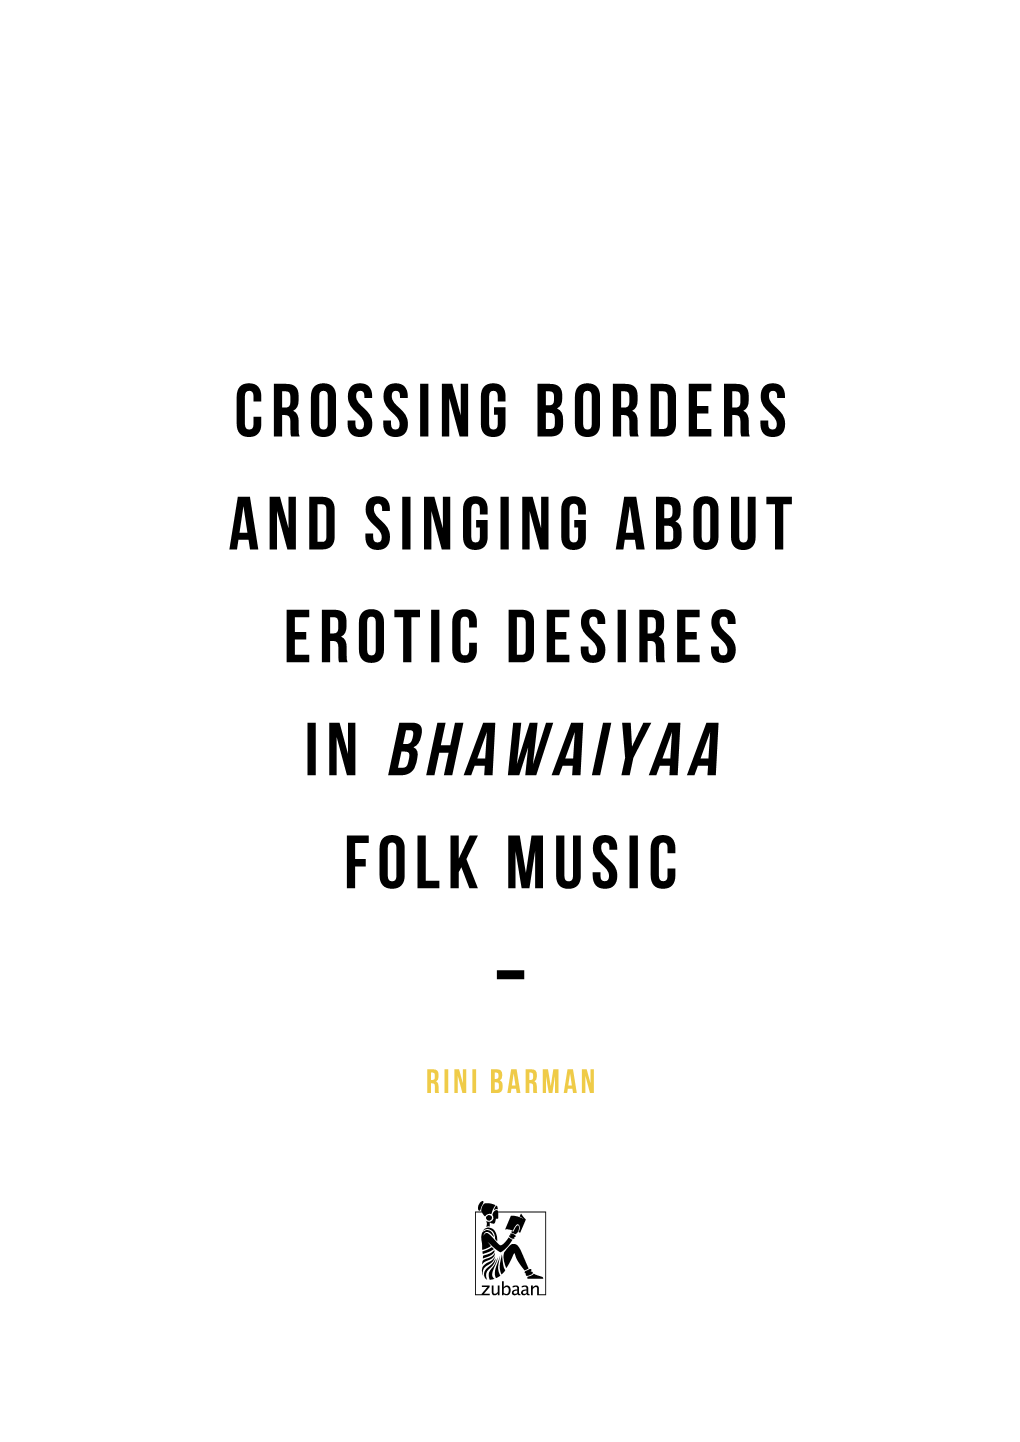 Crossing Borders and Singing Erotic Desires in Bhawaiyaa Folk Music